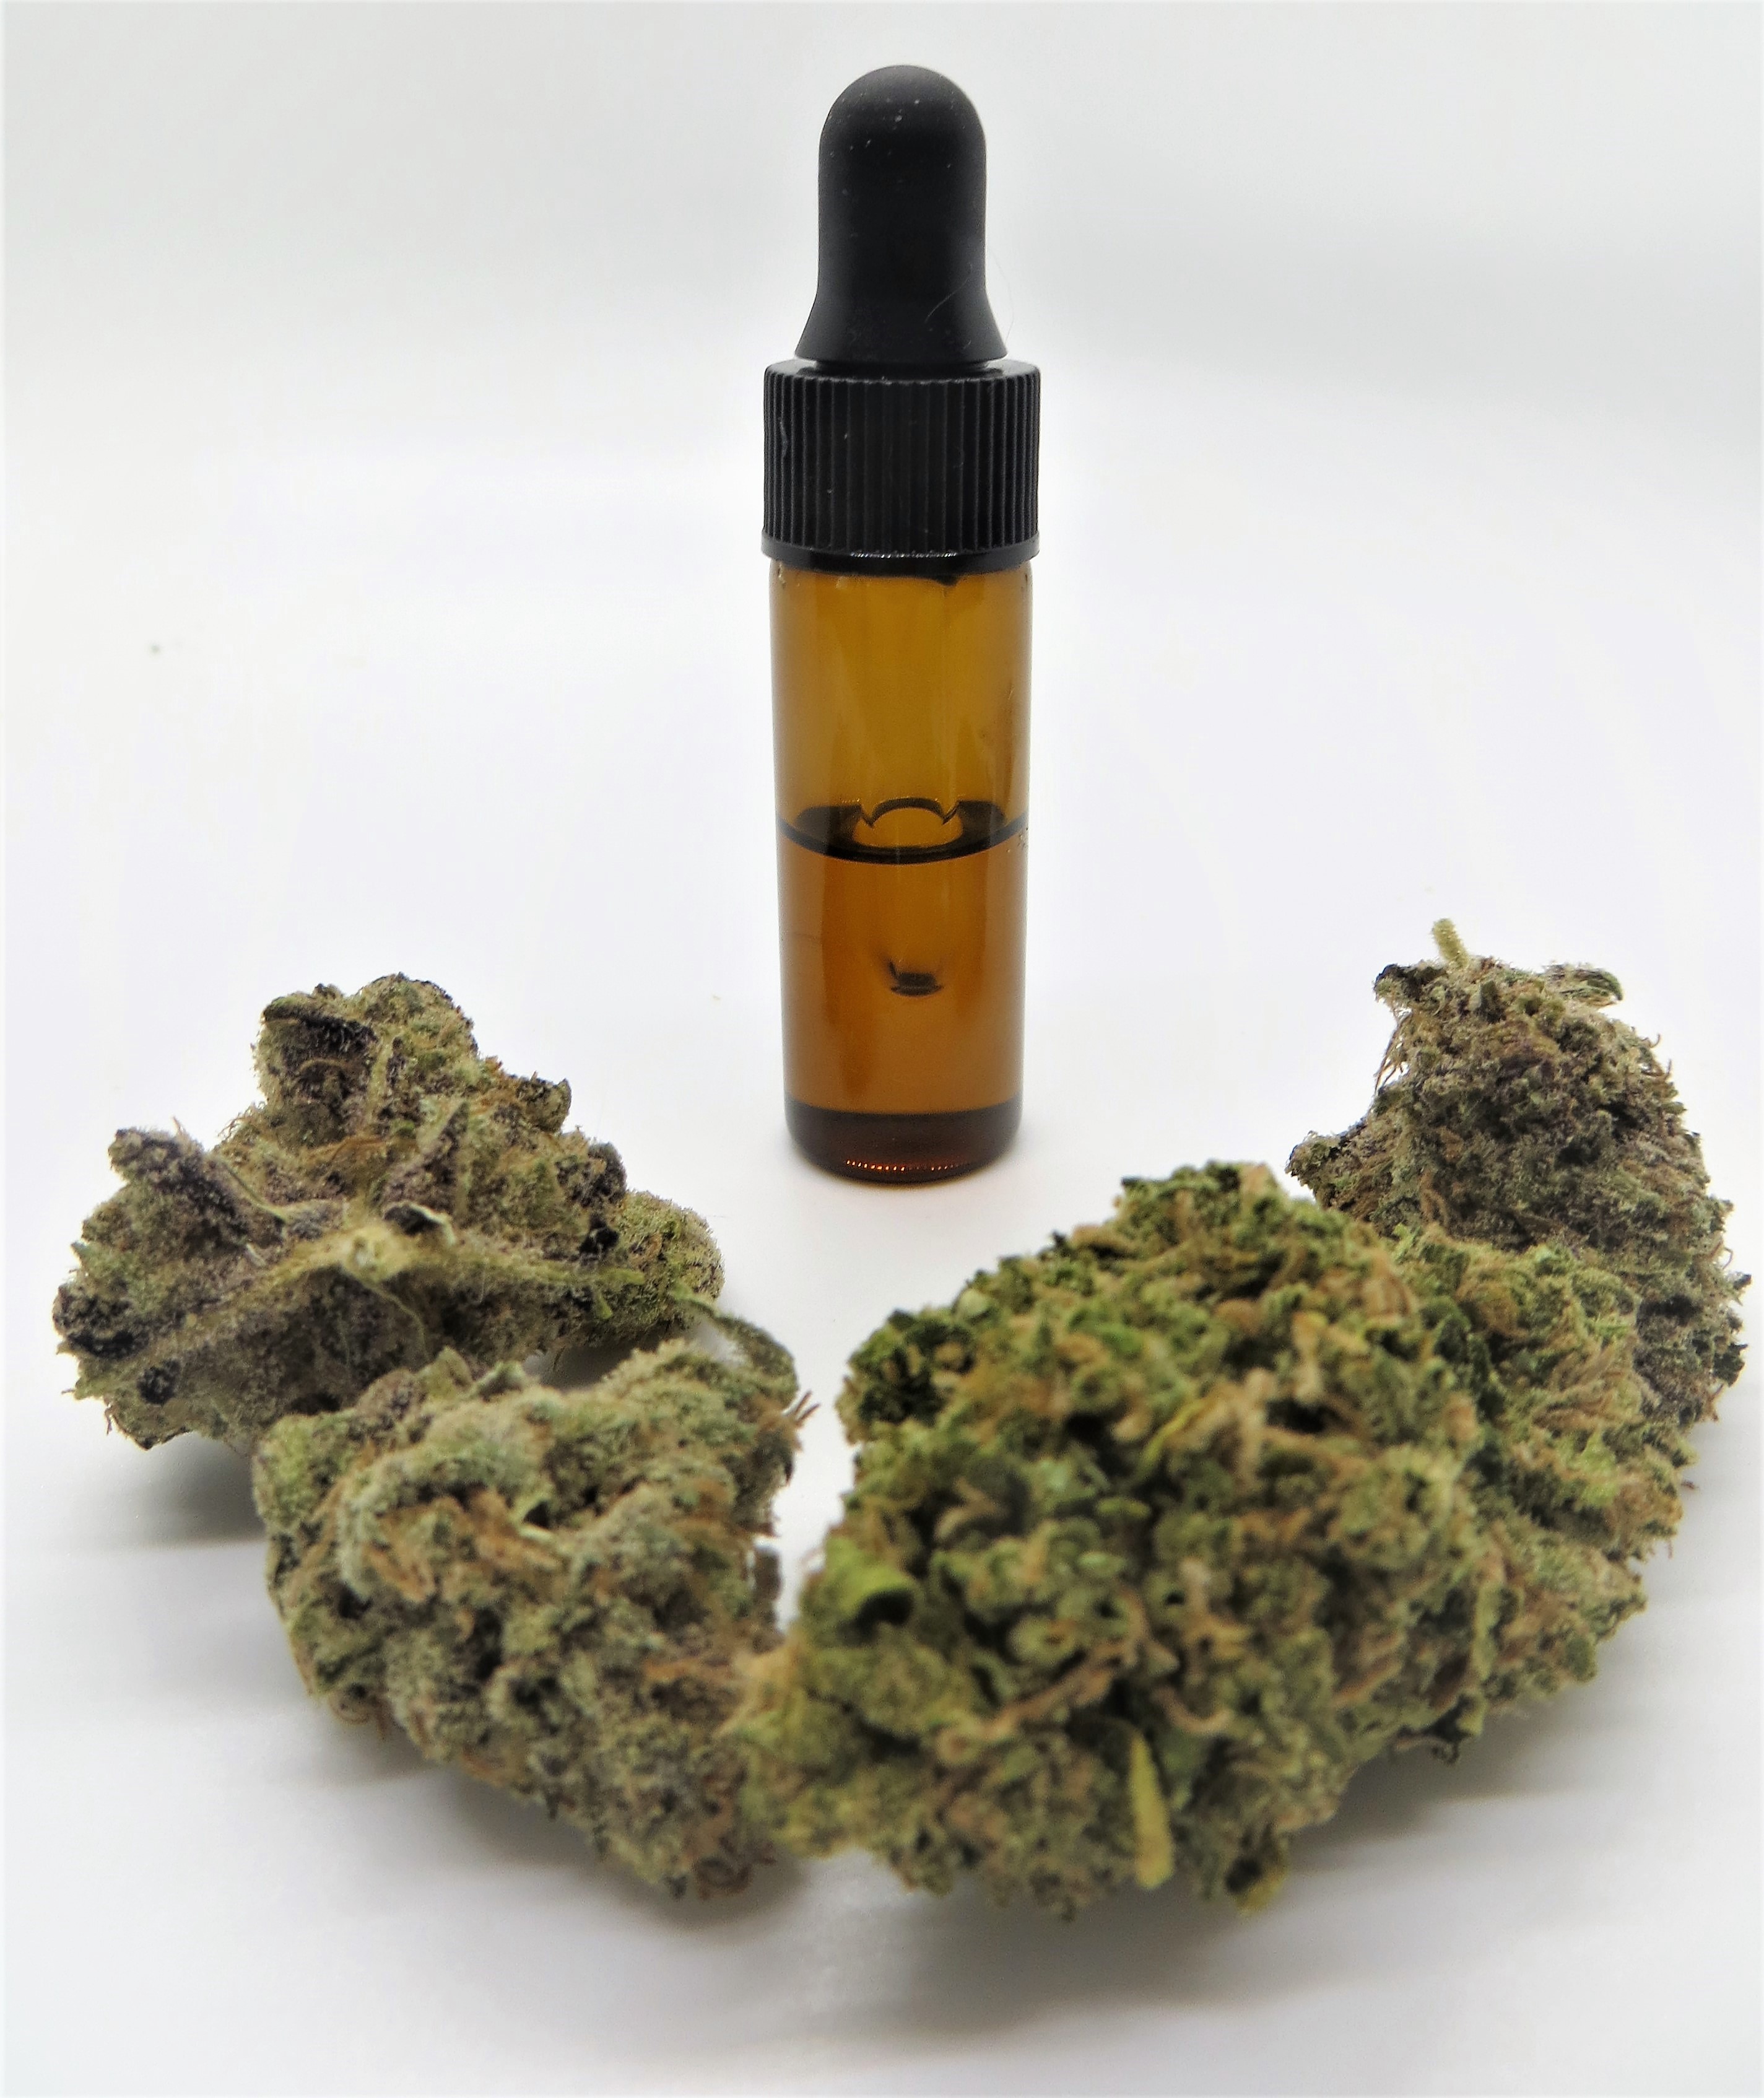 GraniteLeaf-cannabis-medicinal-dispensary-merrimack-chichester-NH-natural-medical-marijuana-alternative-treatment-education-Flower-Bud-Tincture